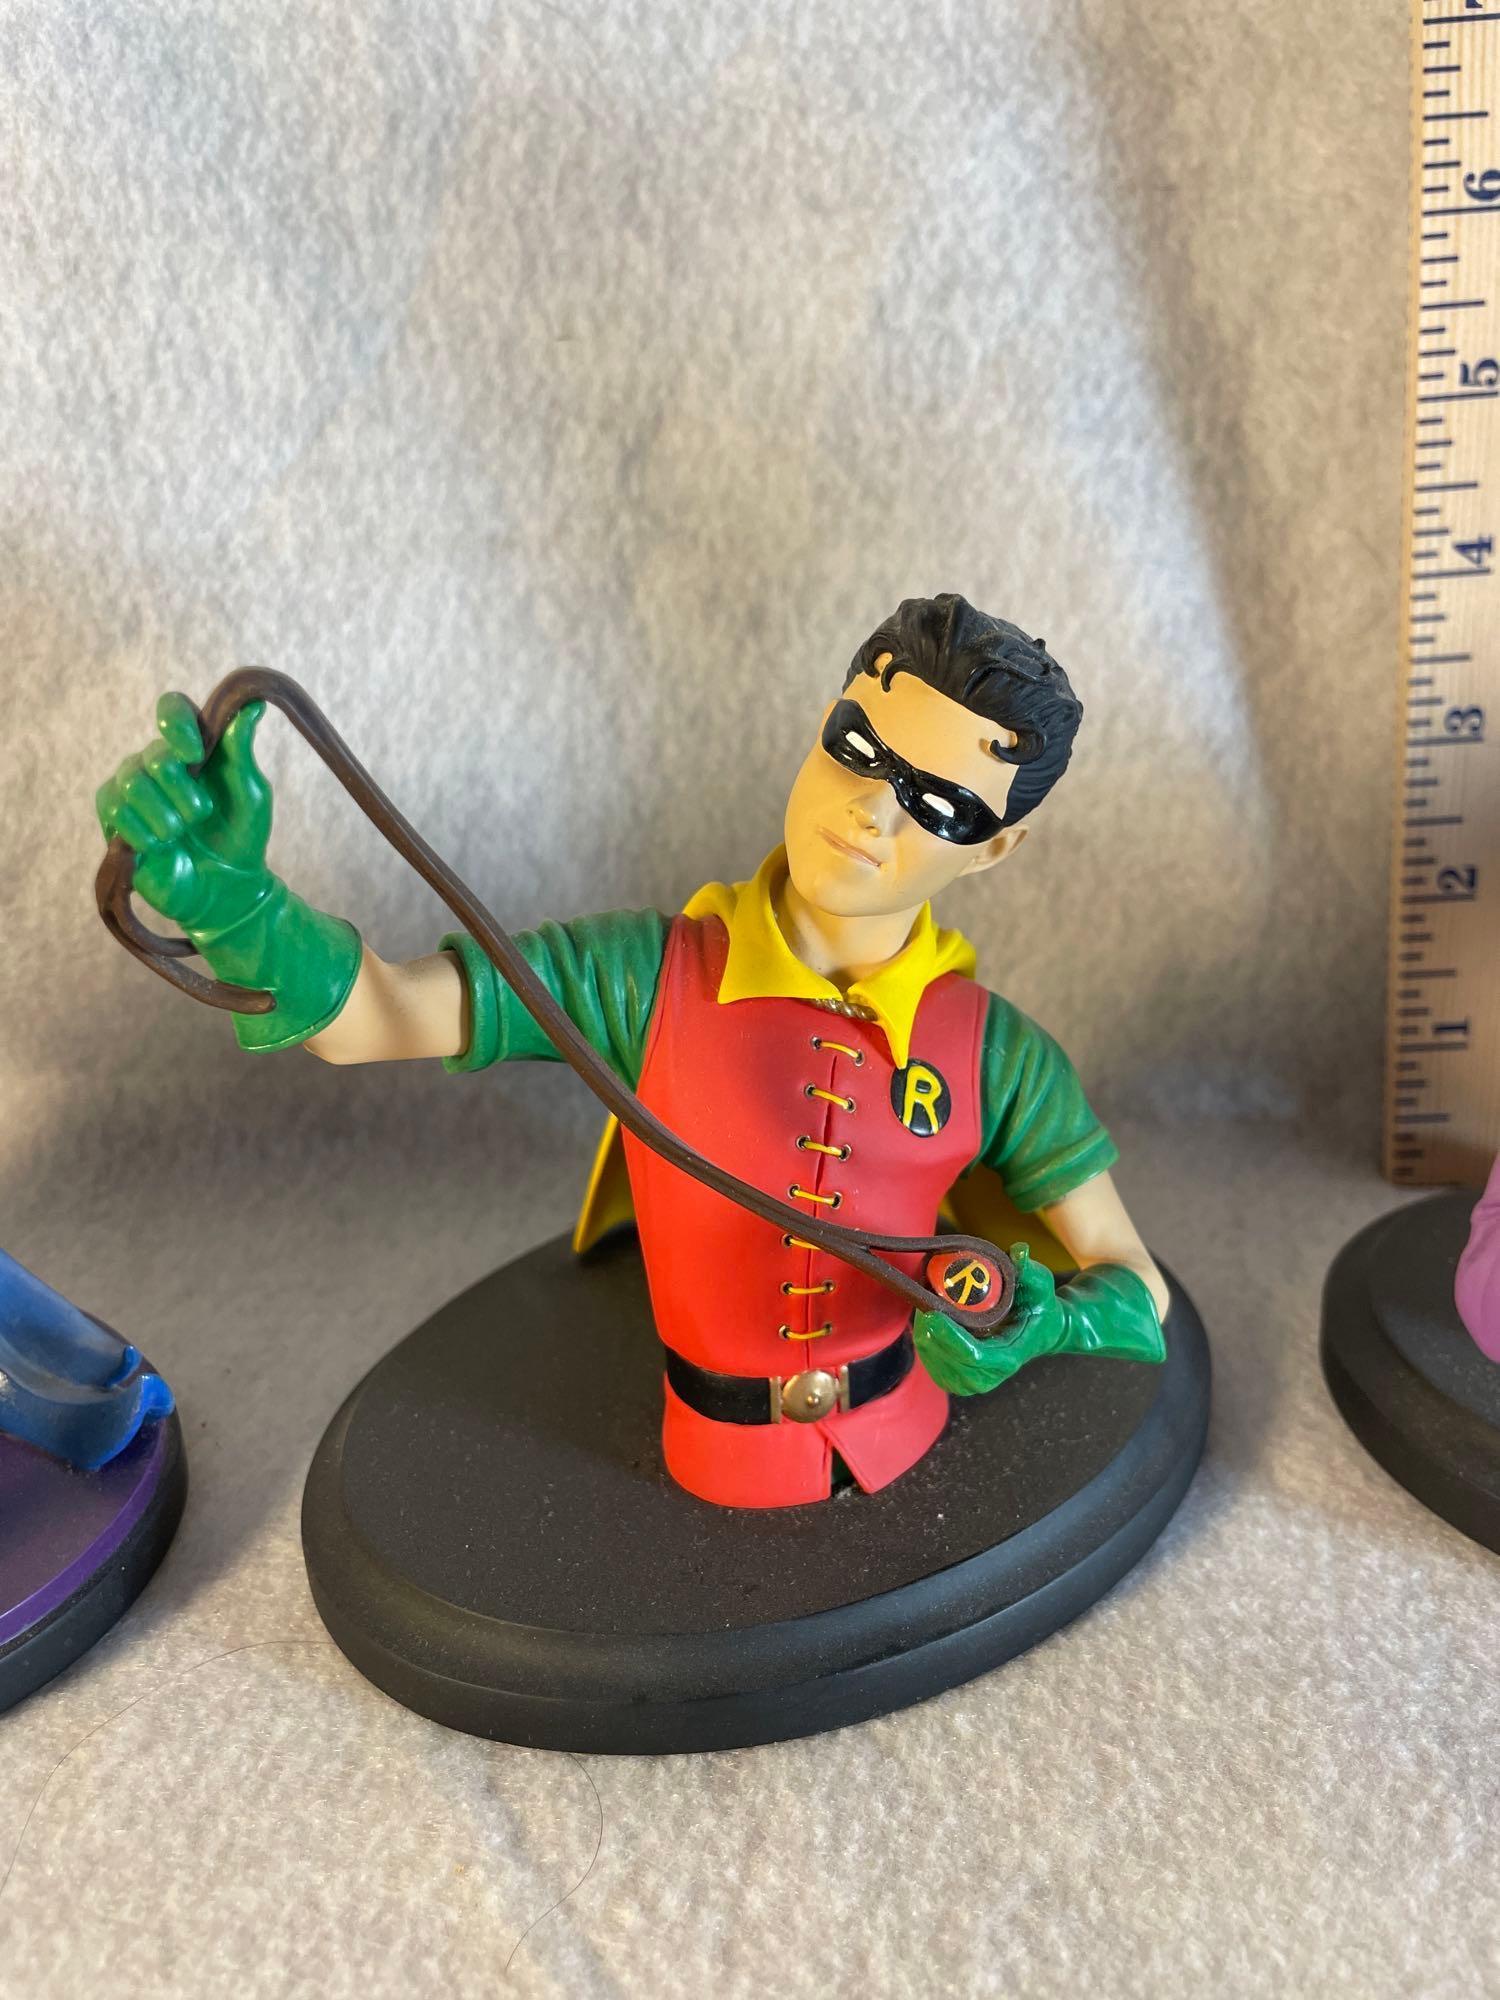 Batman, Robin, The Joker, and Batgirl Mini Busts